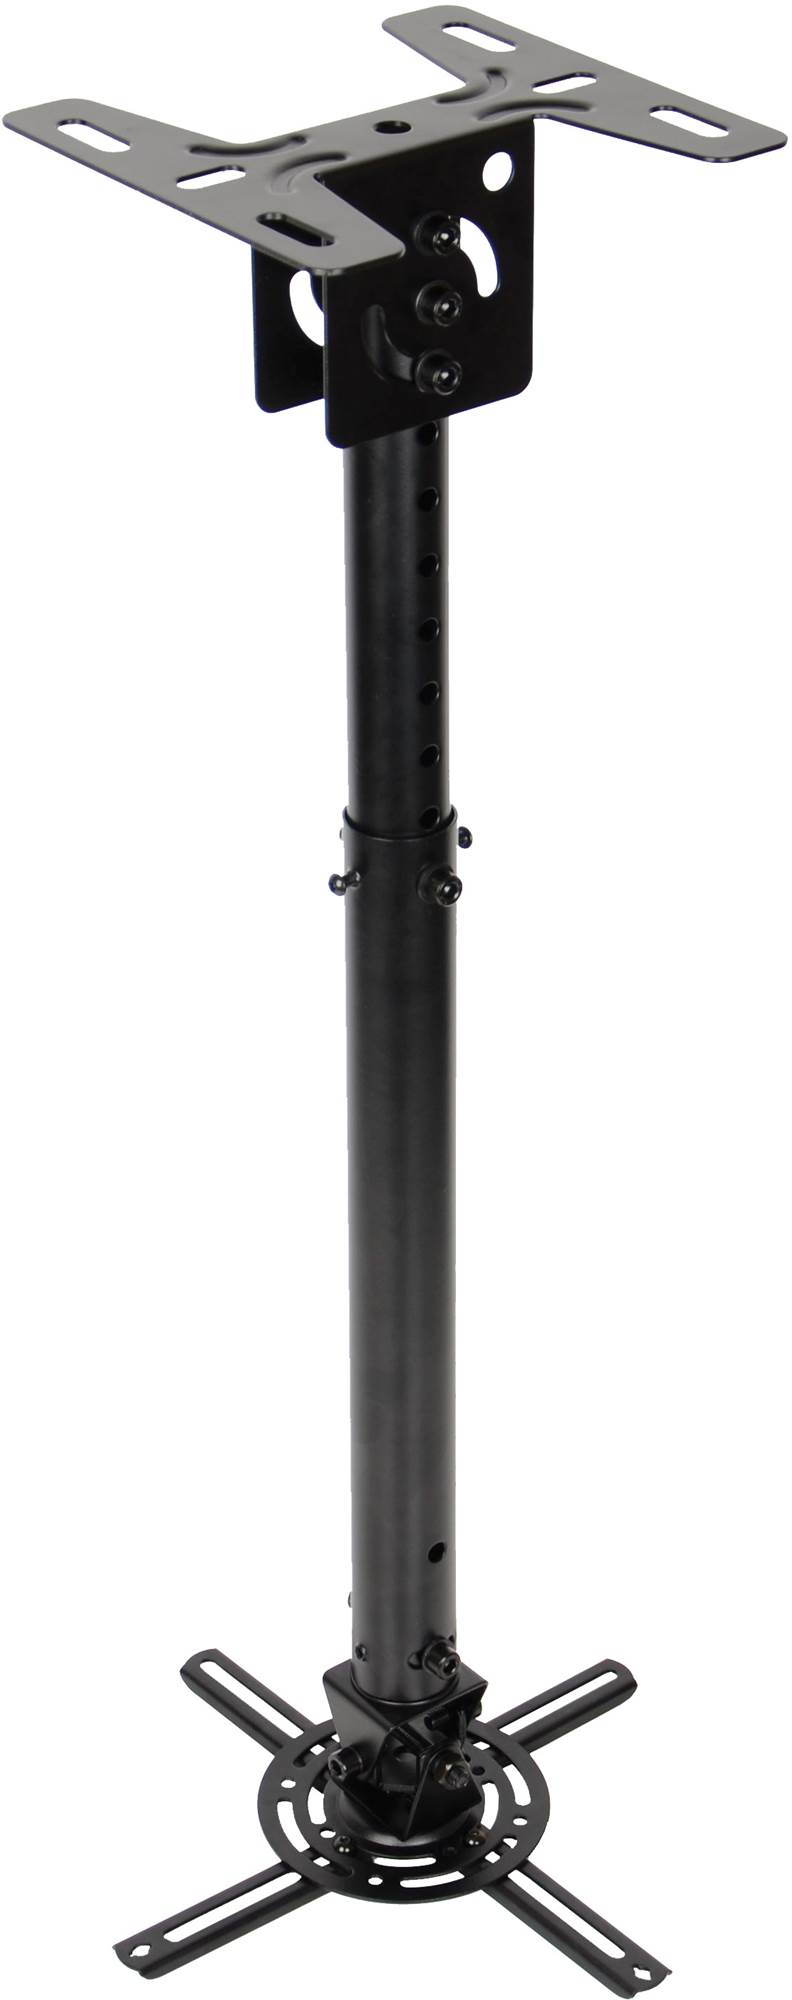 Optoma univerzális mennyezeti konzol, fekete (576-826mm), 15kg